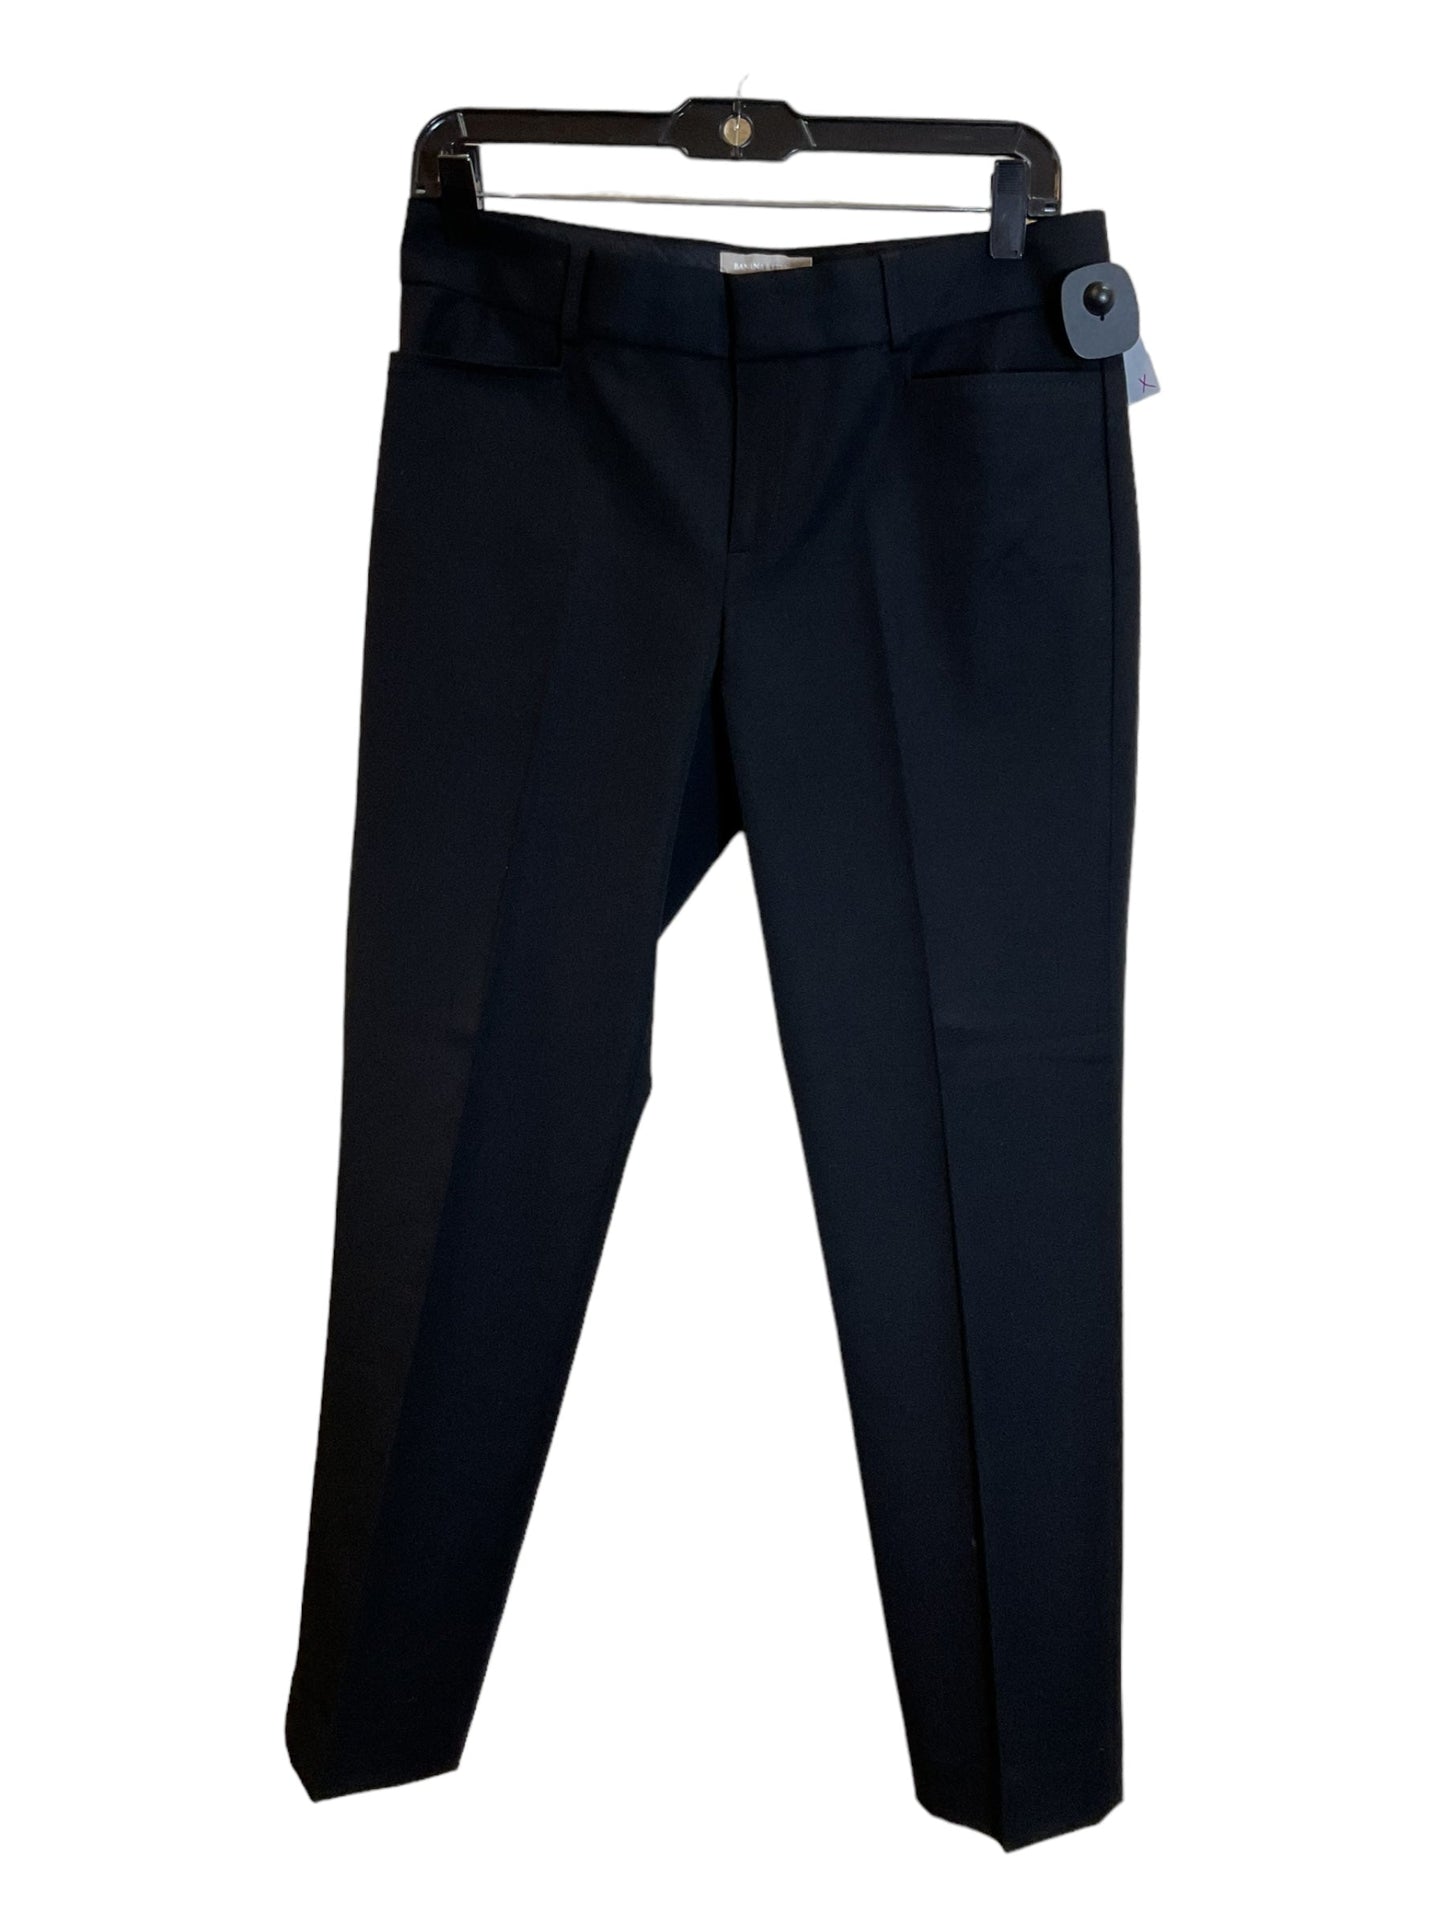 Black Pants Chinos & Khakis Banana Republic, Size 6